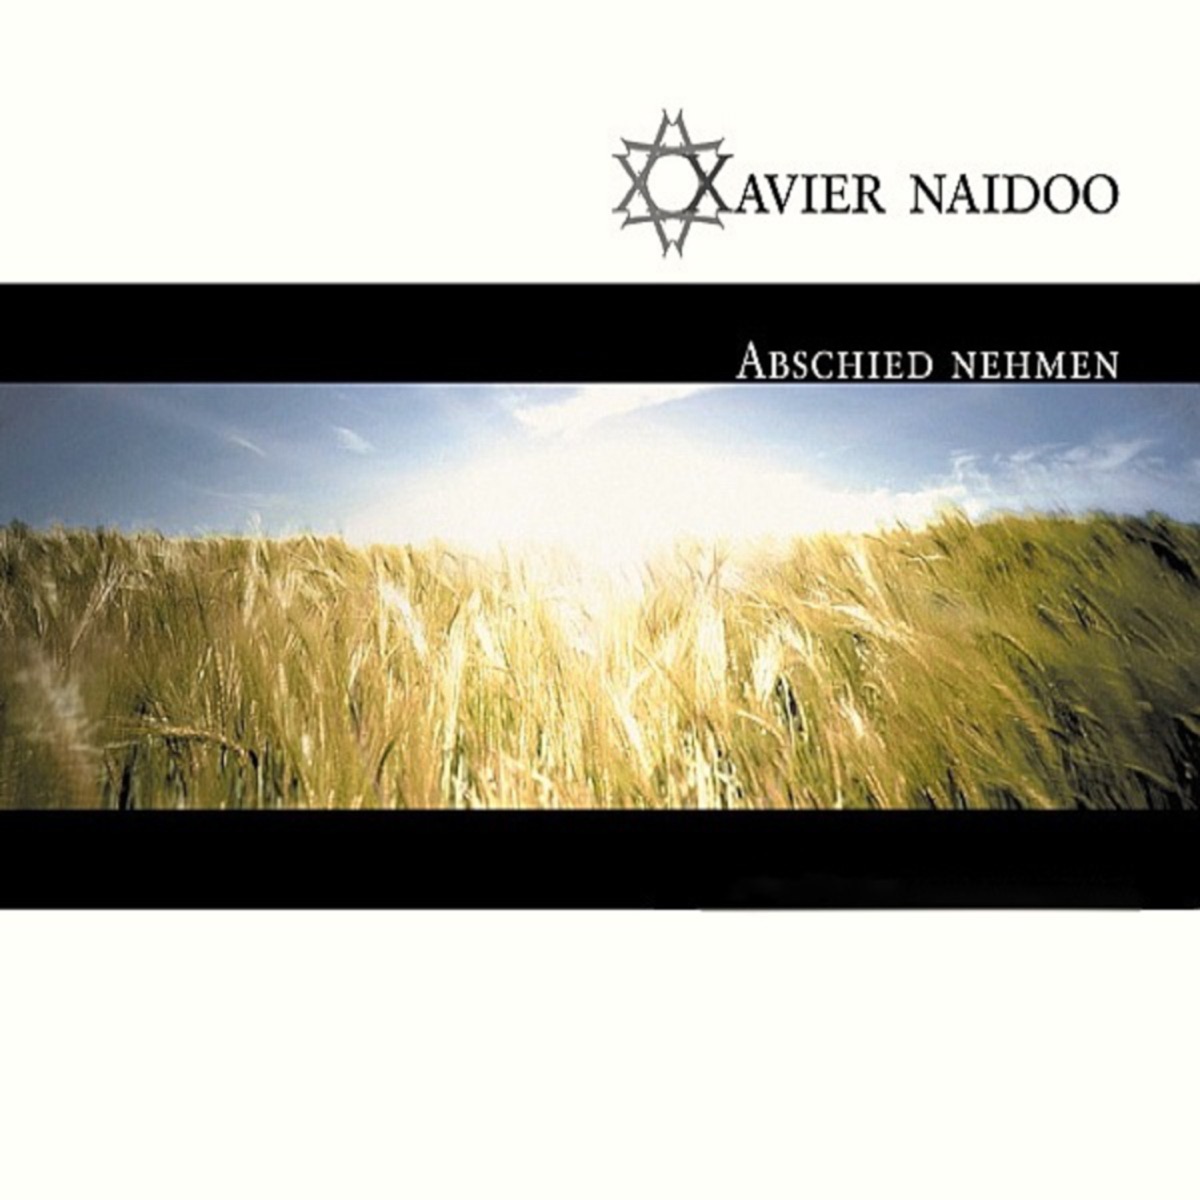 Xavier Naidoo Abschied nehmen cover artwork